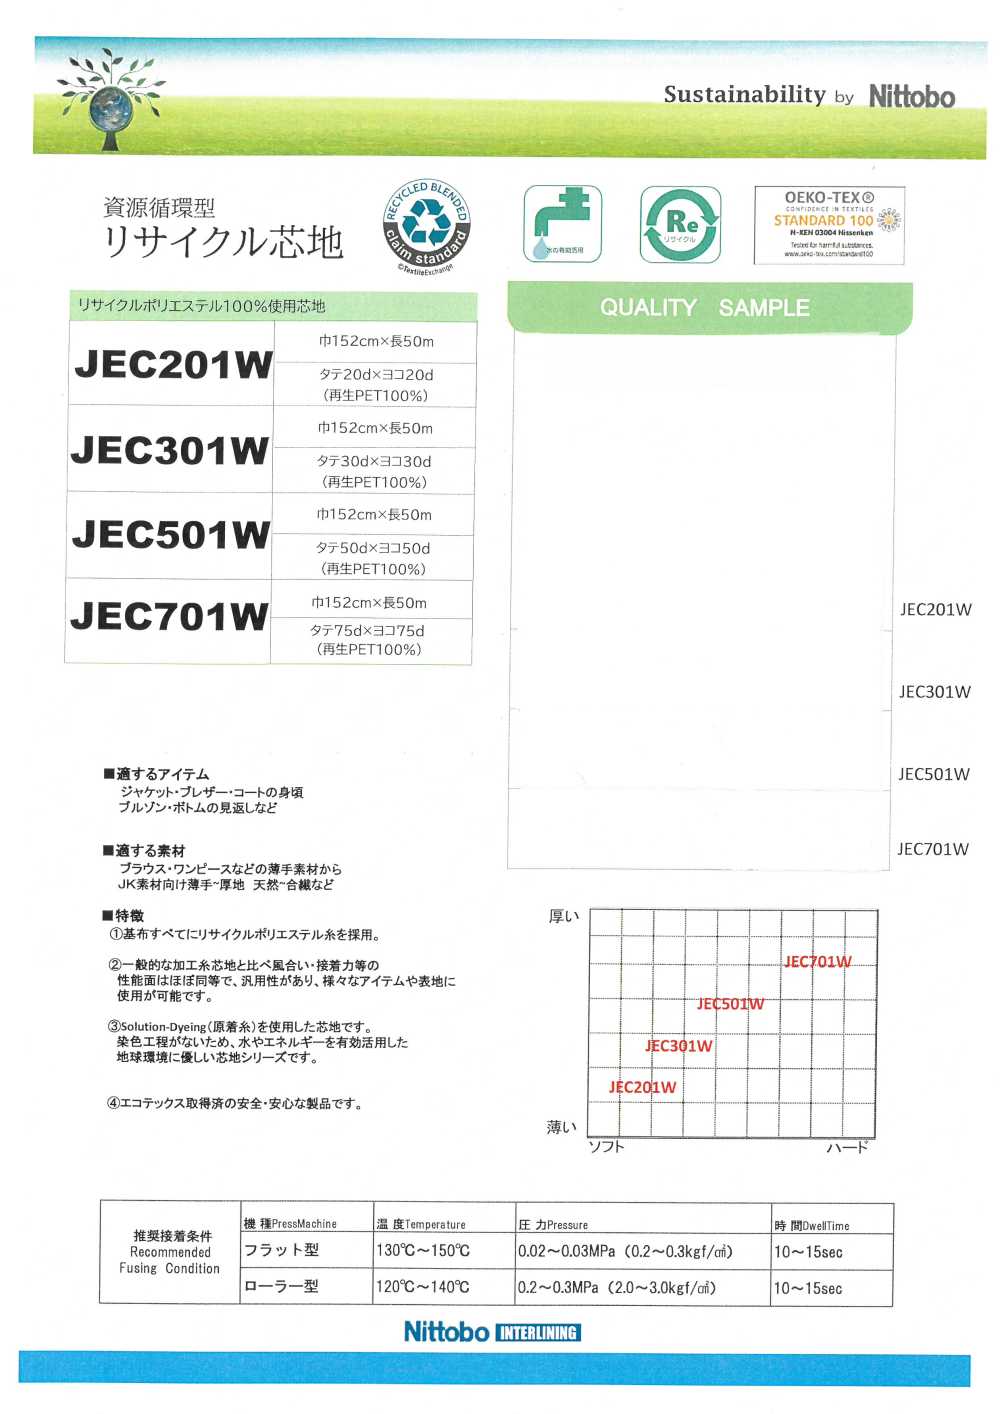 JEC201W Materiali Riciclati 20D Sottili Interlining Morbidi Versatili Utilizzati[Interfodera] Nittobo